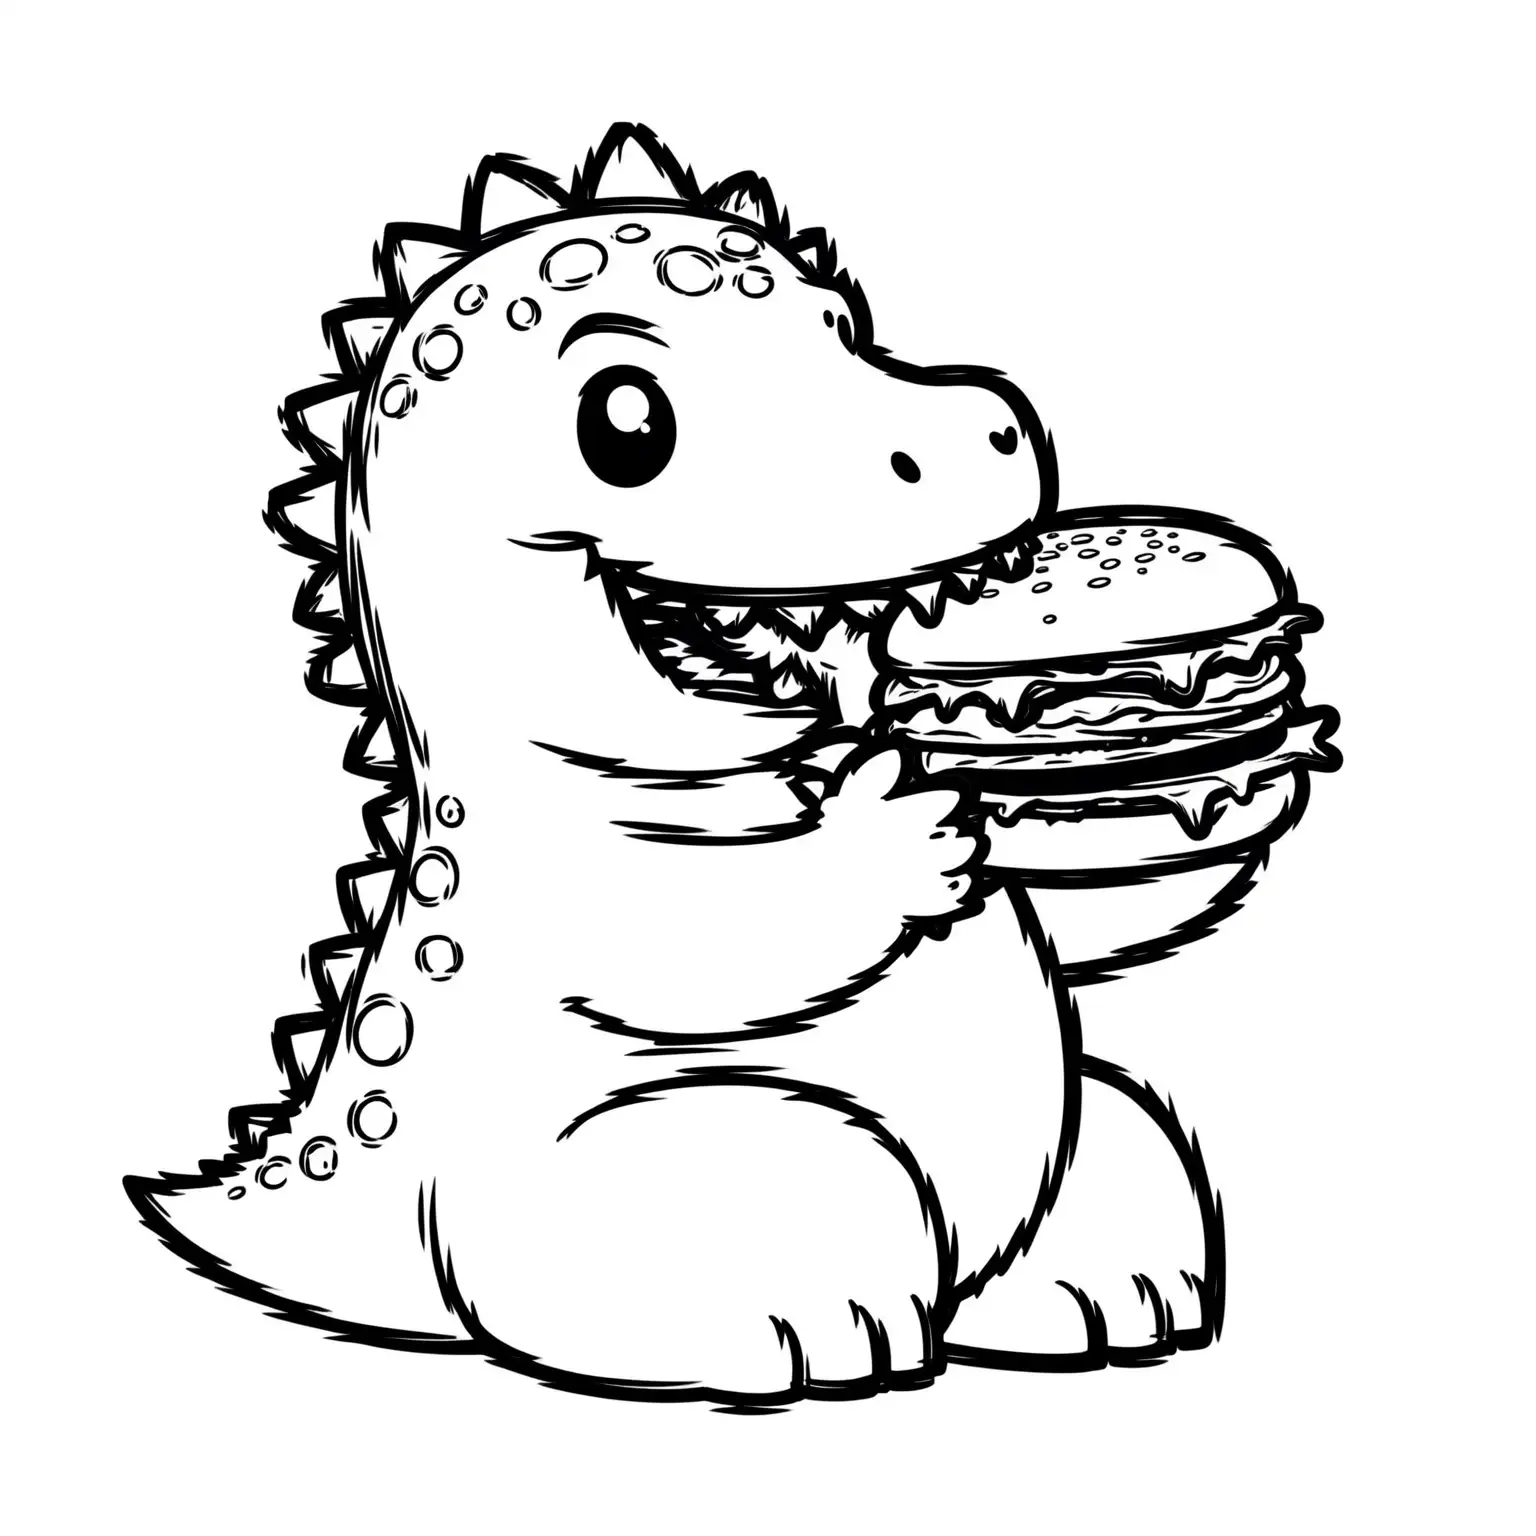 Adorable Dinosaur Enjoying a Burger Fun Coloring Book Page